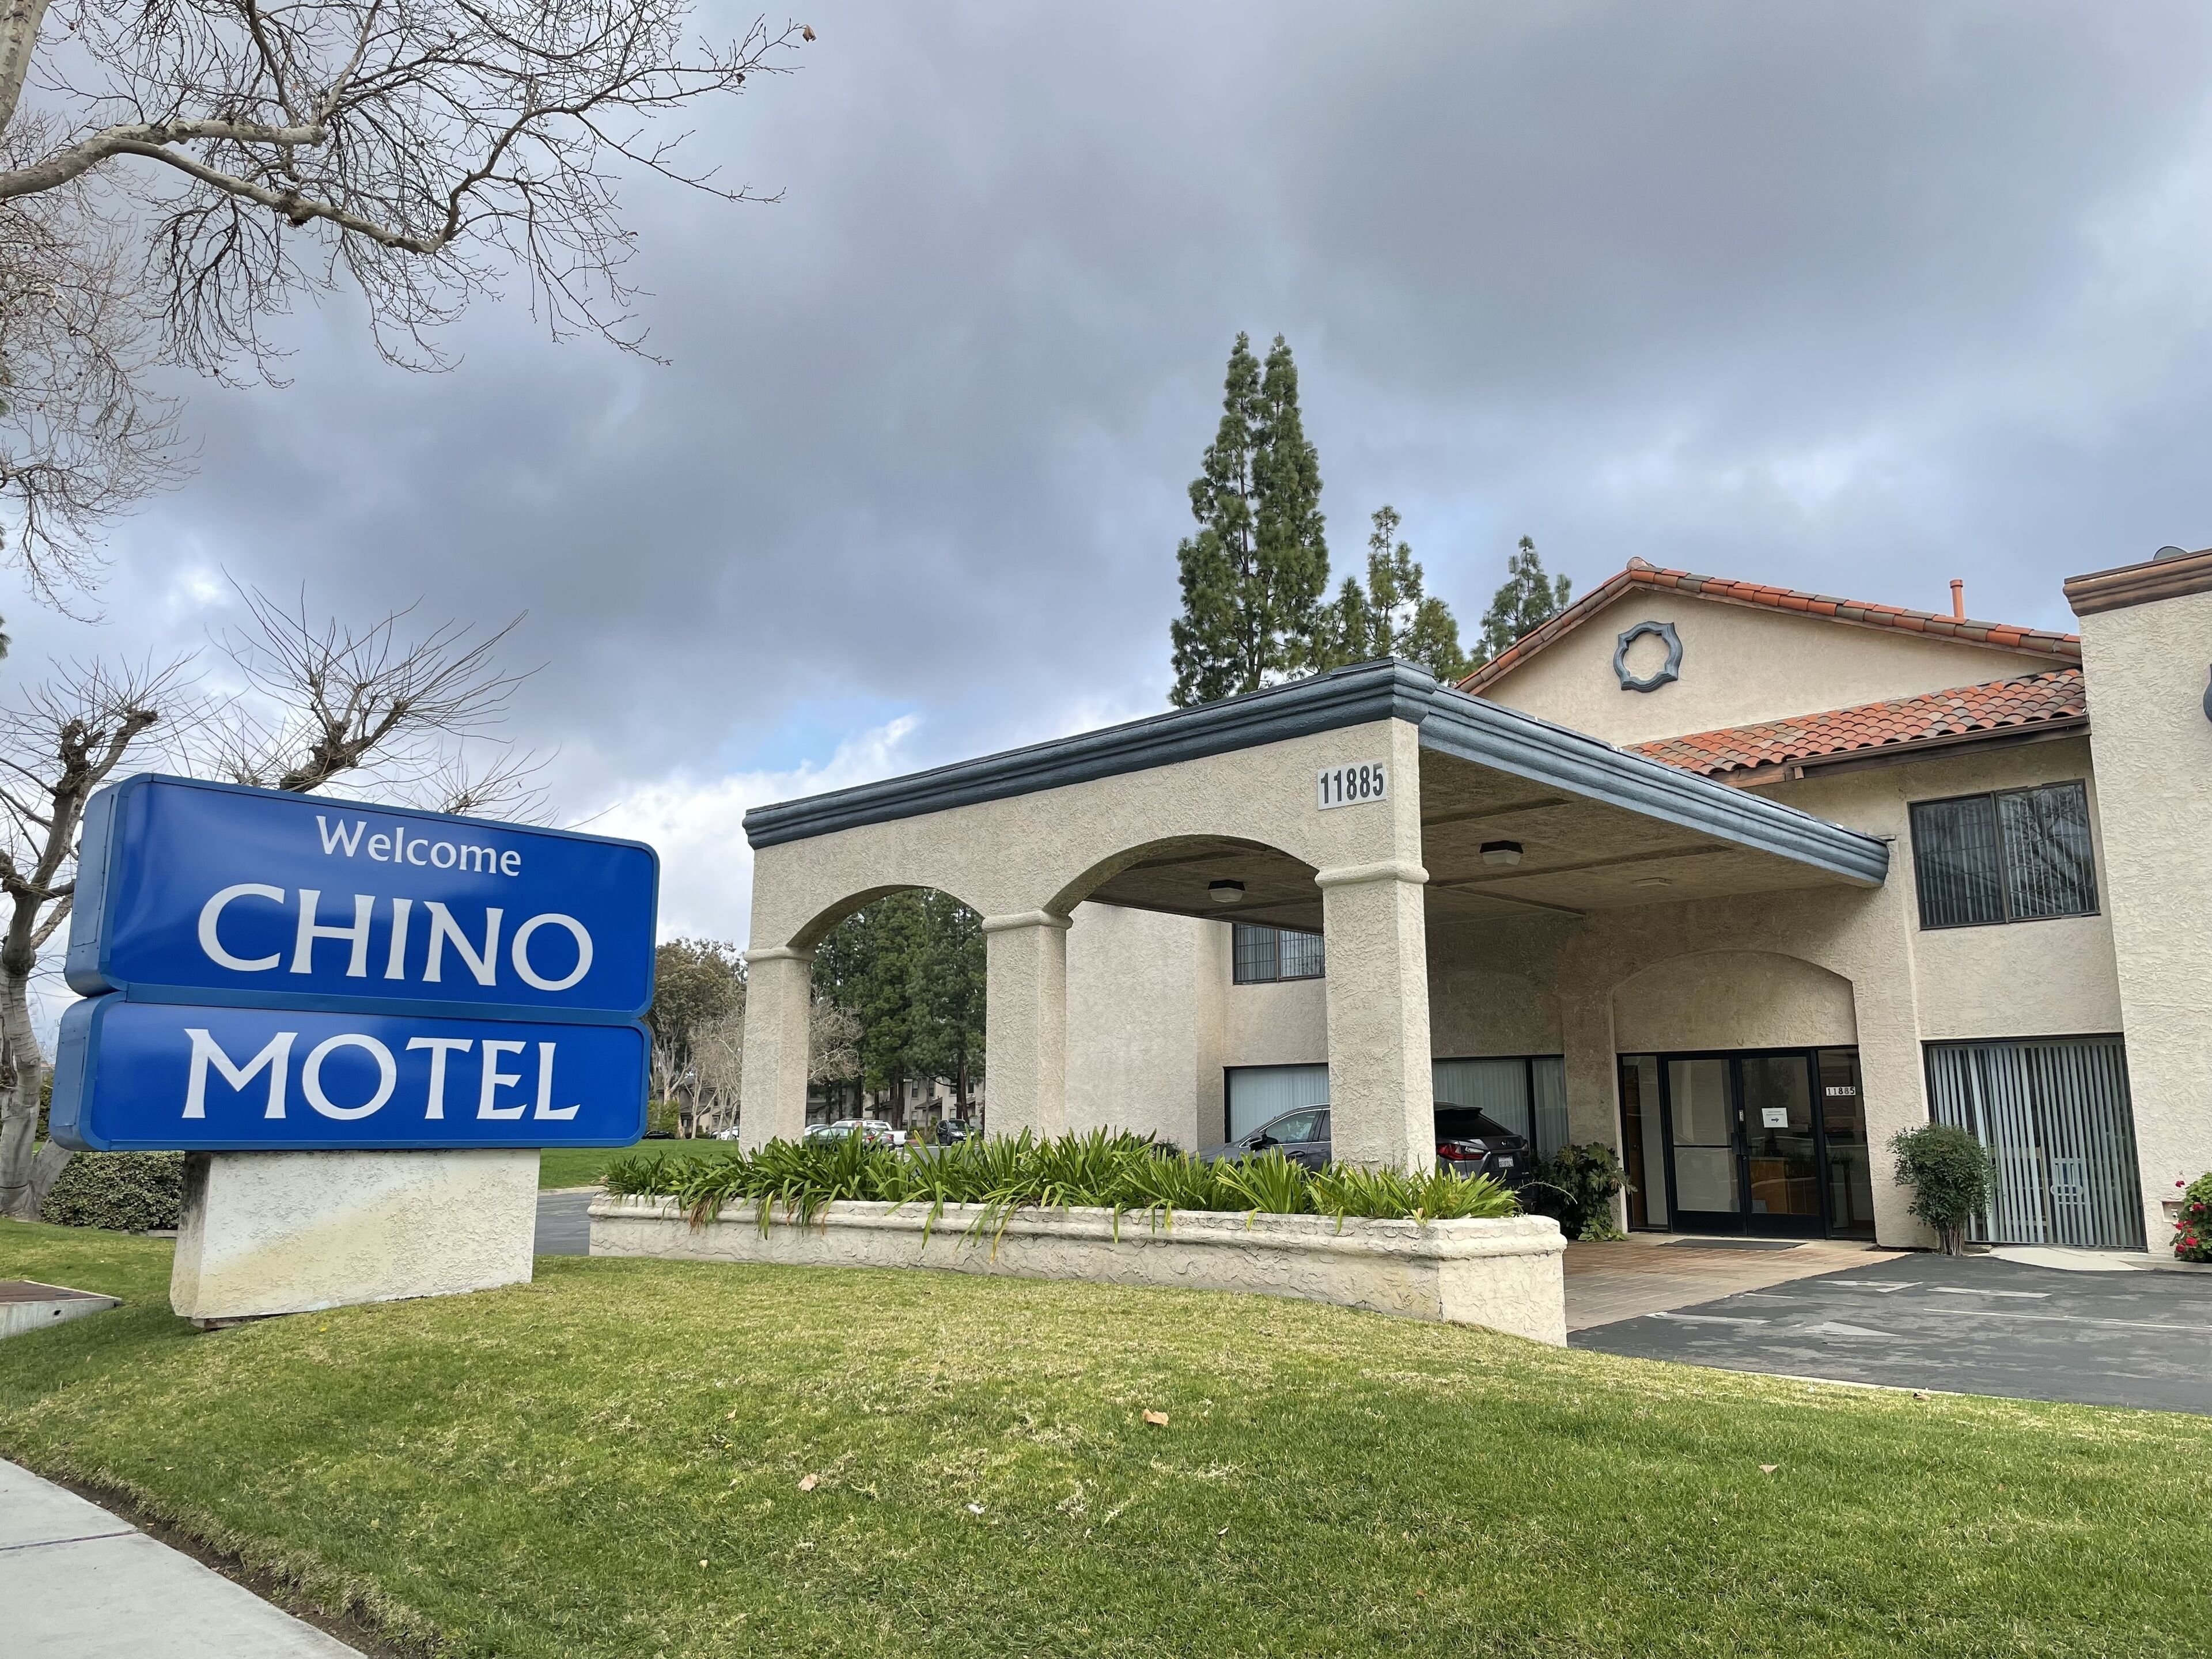 Chino Motel